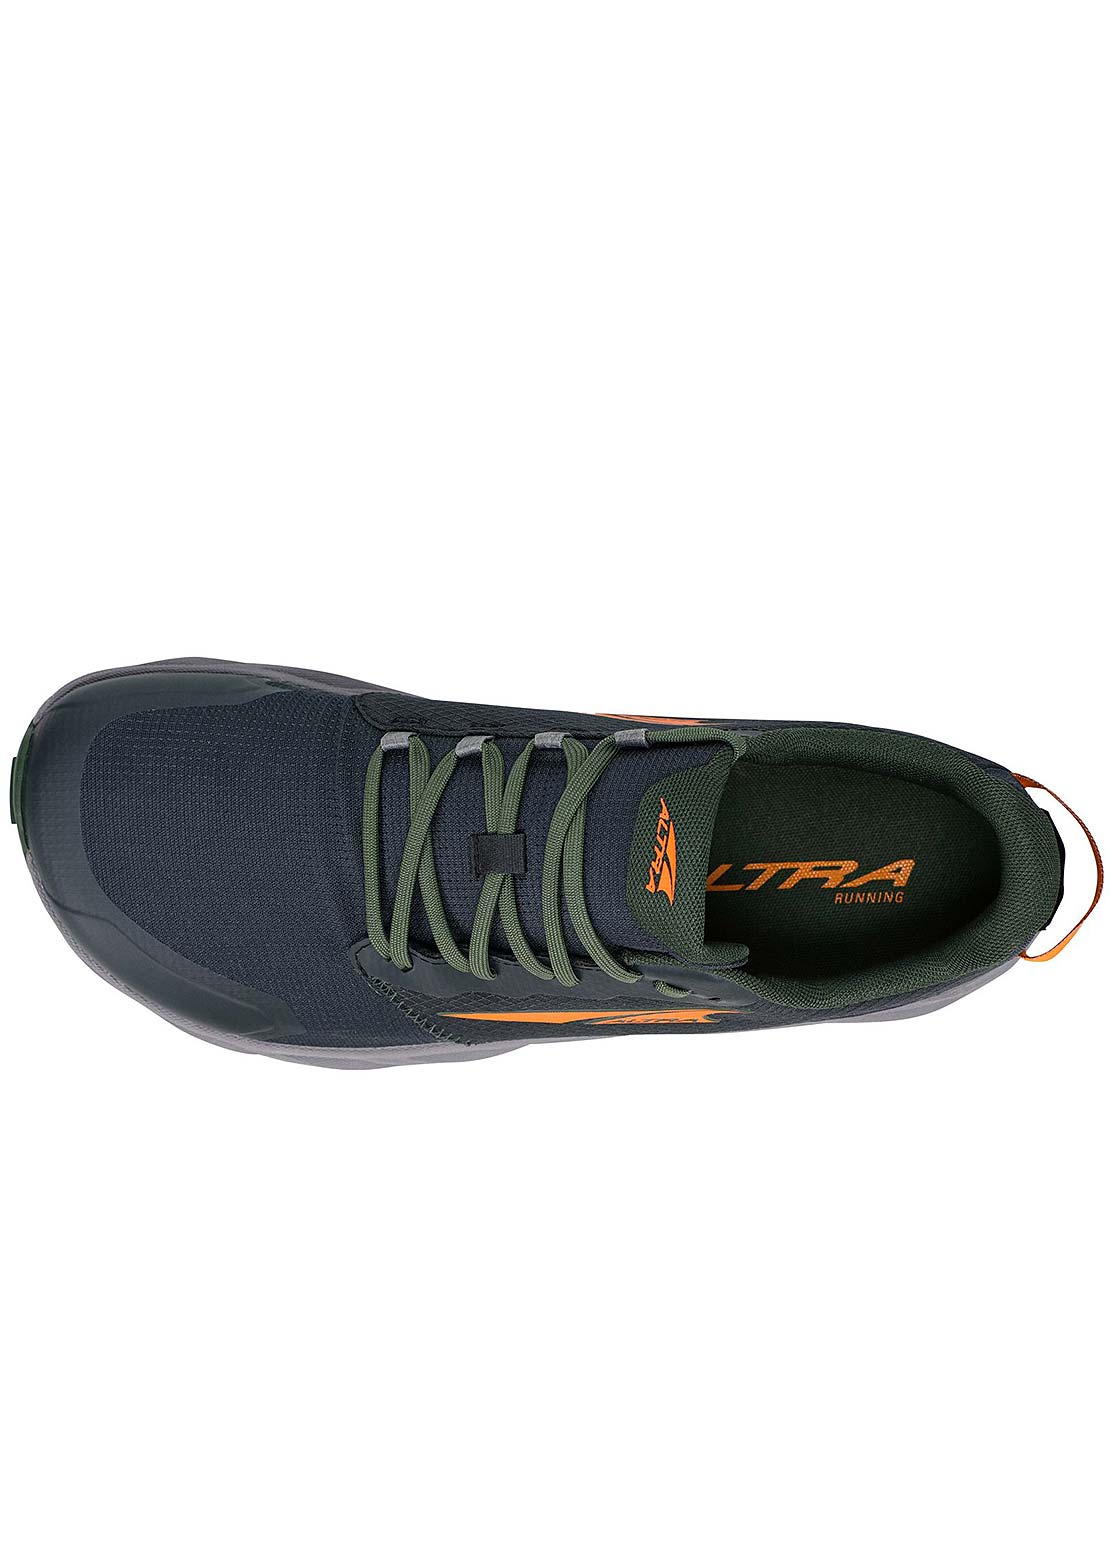 Altra Men&#39;s Superior 6 Trail Running Shoes Black